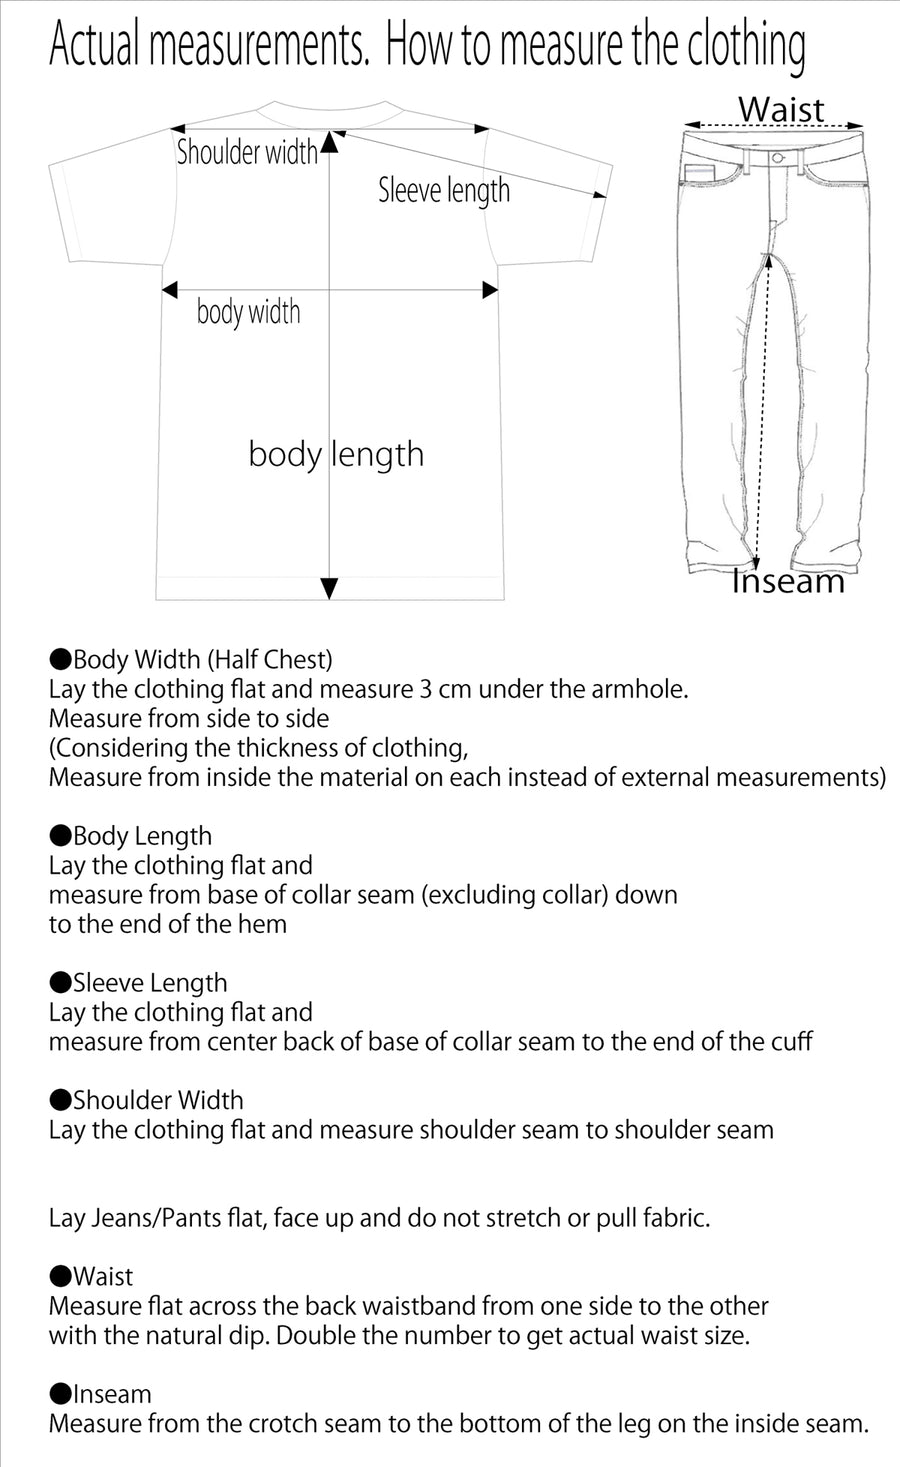 TOYS McCOY Sweatshirt Men's Plain Sweat Shirt Loop-wheeled Vintage Style TMC1675 040 Sand-Beige/Ash-Gray